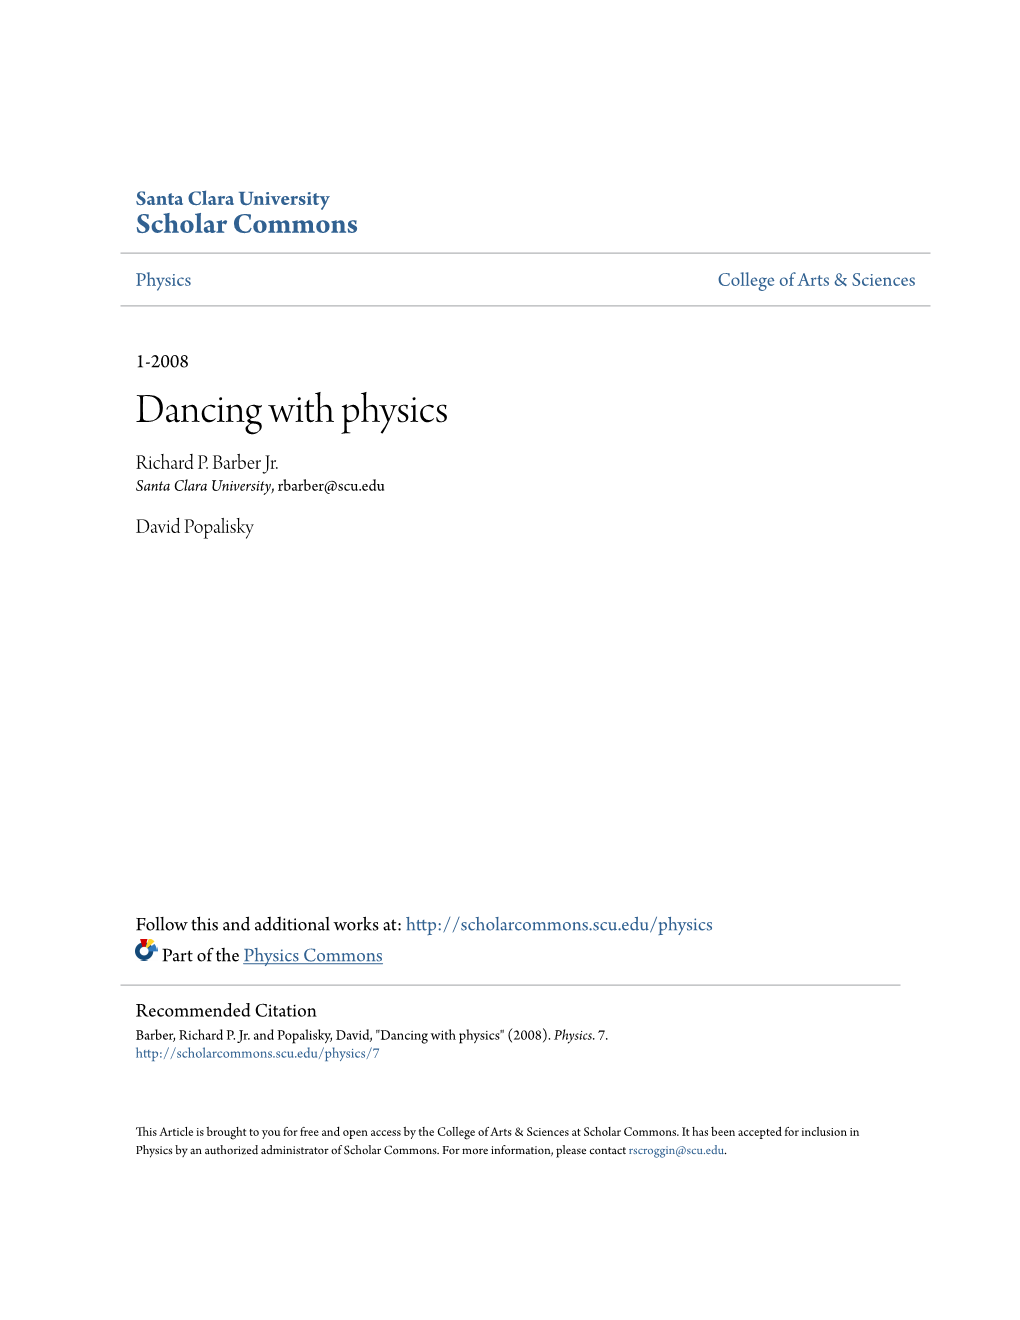 Dancing with Physics Richard P